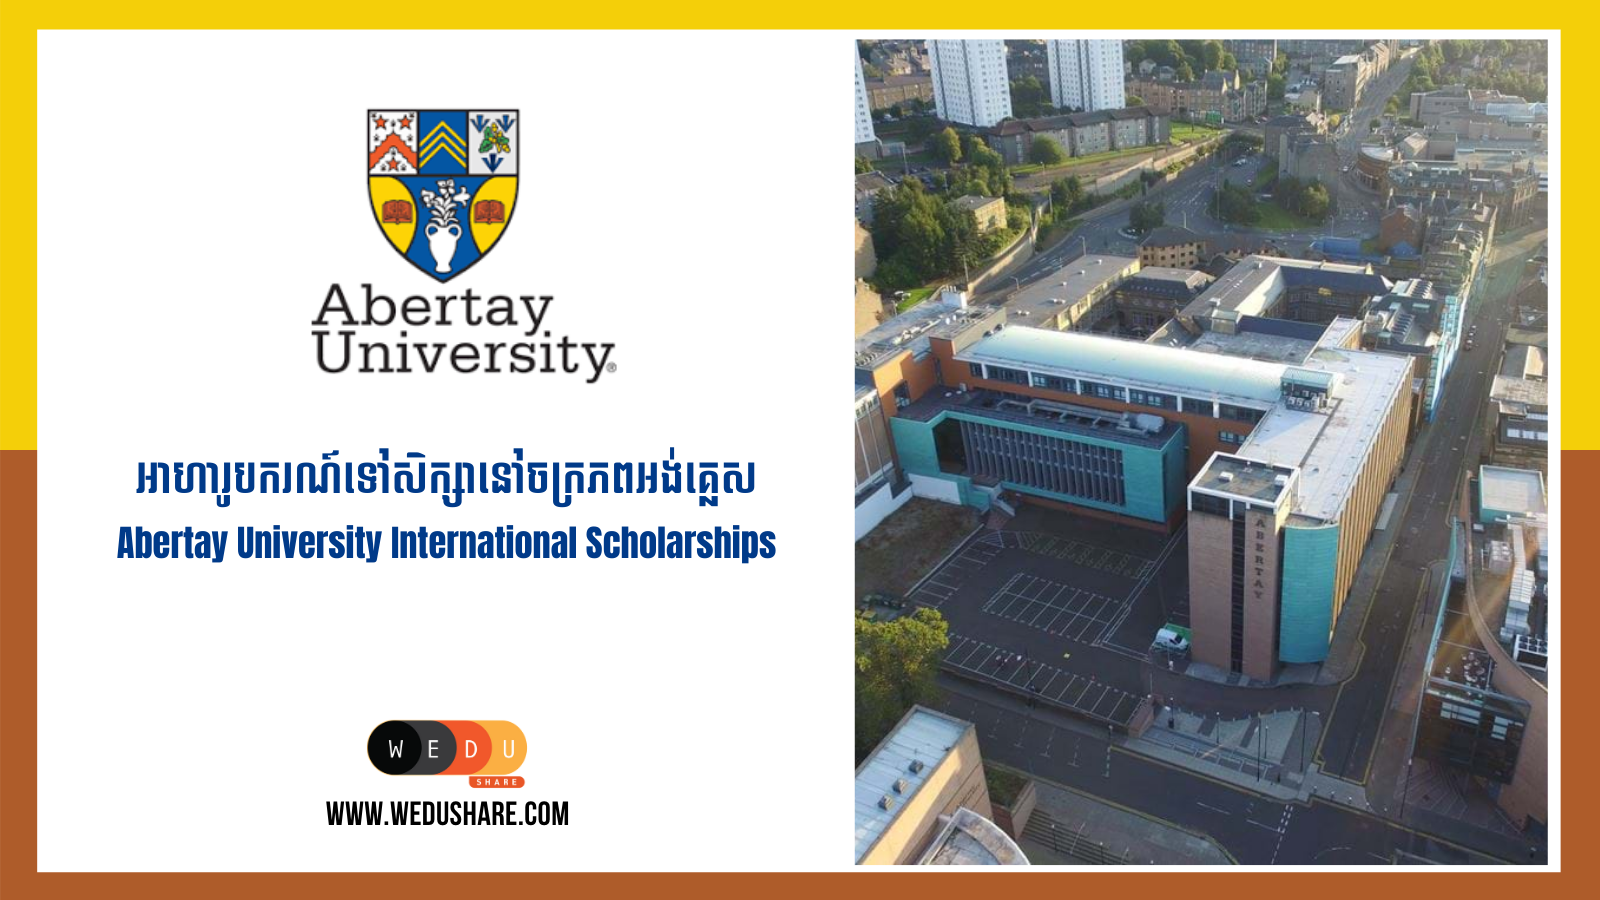 Abertay University International Scholarships Wedushare